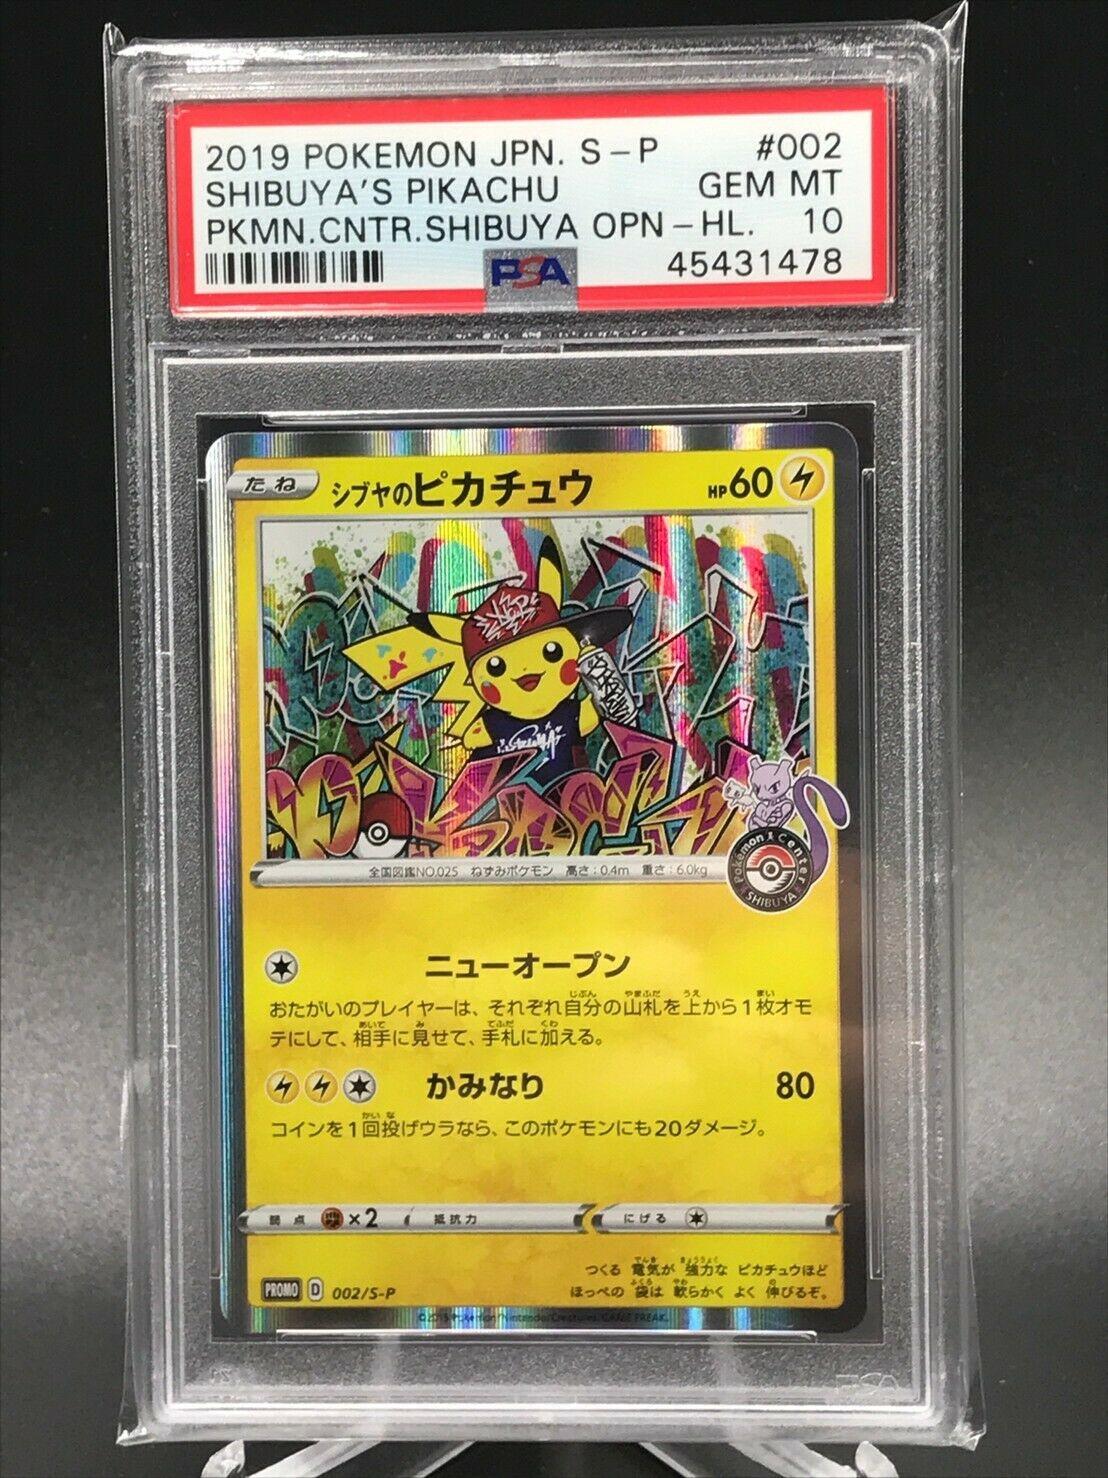 Exc++ Pokemon Shibuya's Pikachu Center 002-S-P From japan 